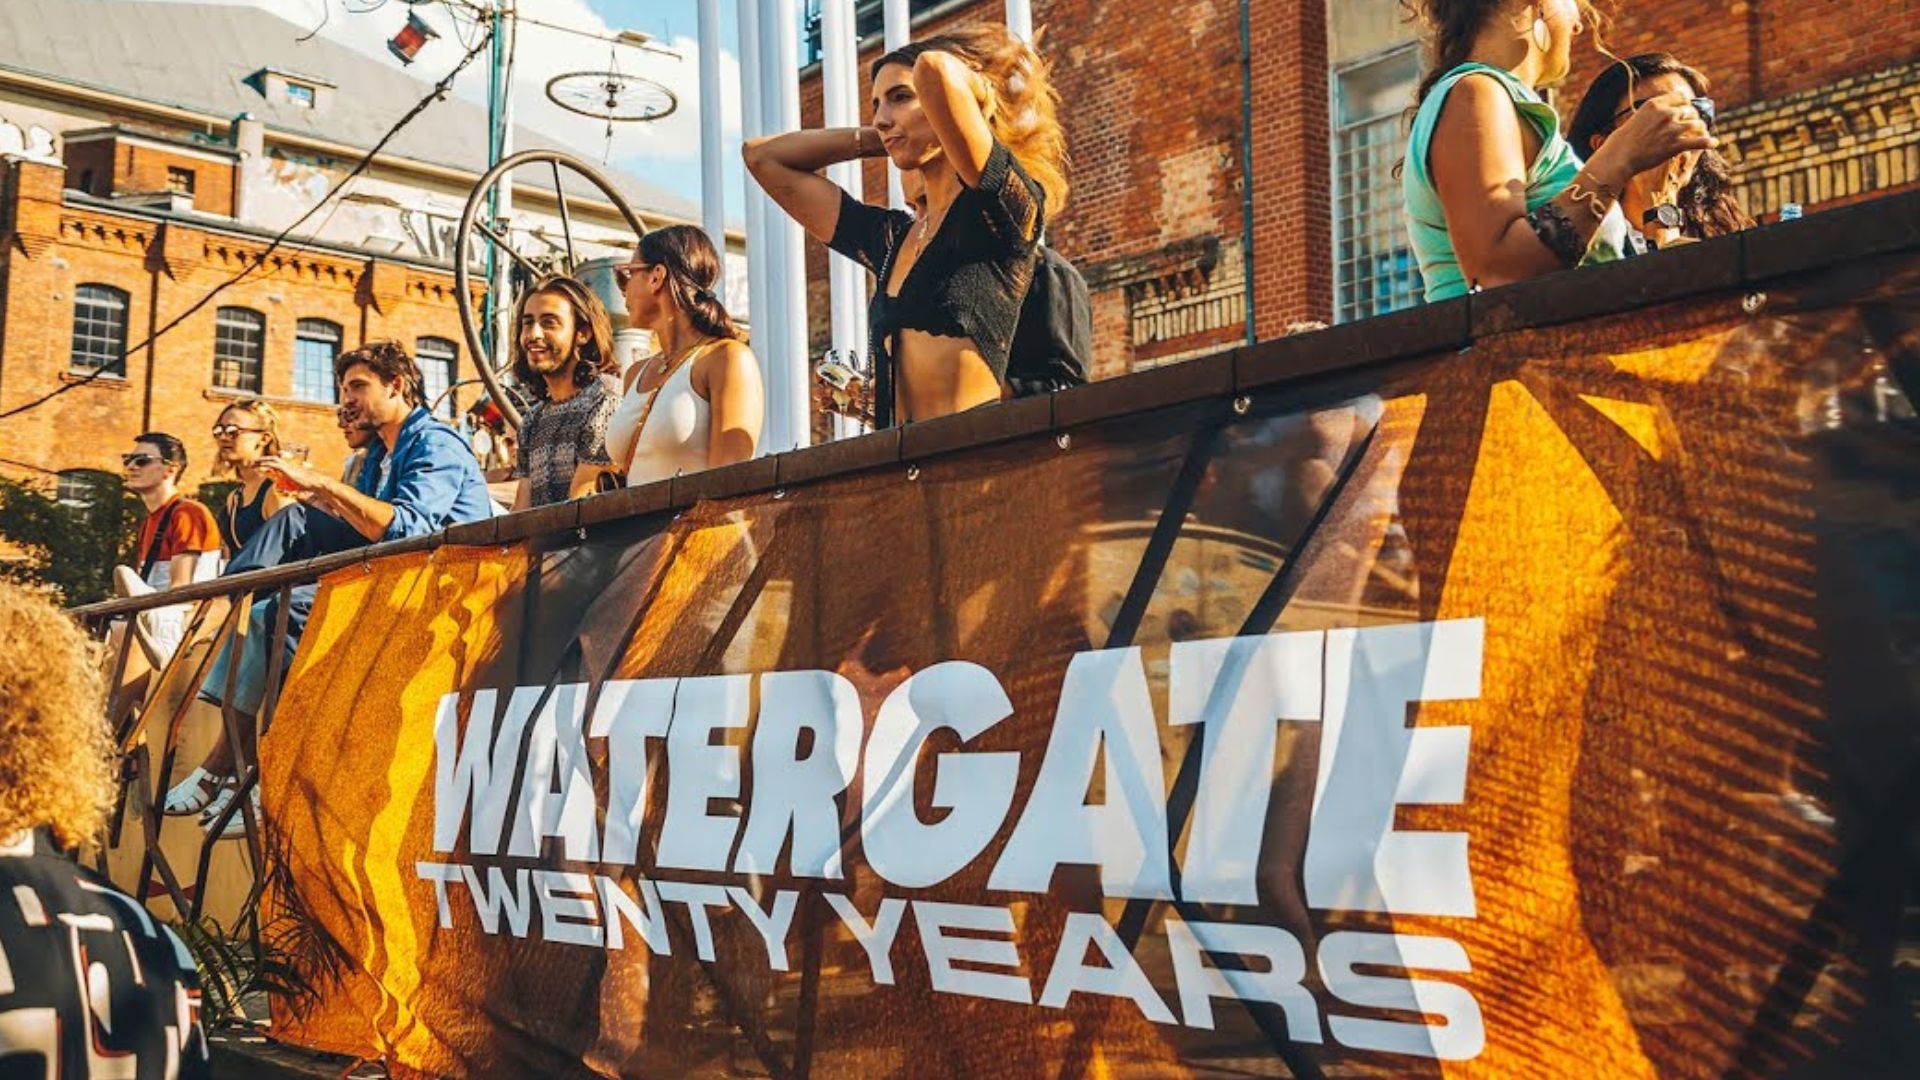 watergate twenty years elektronik müzik partisi